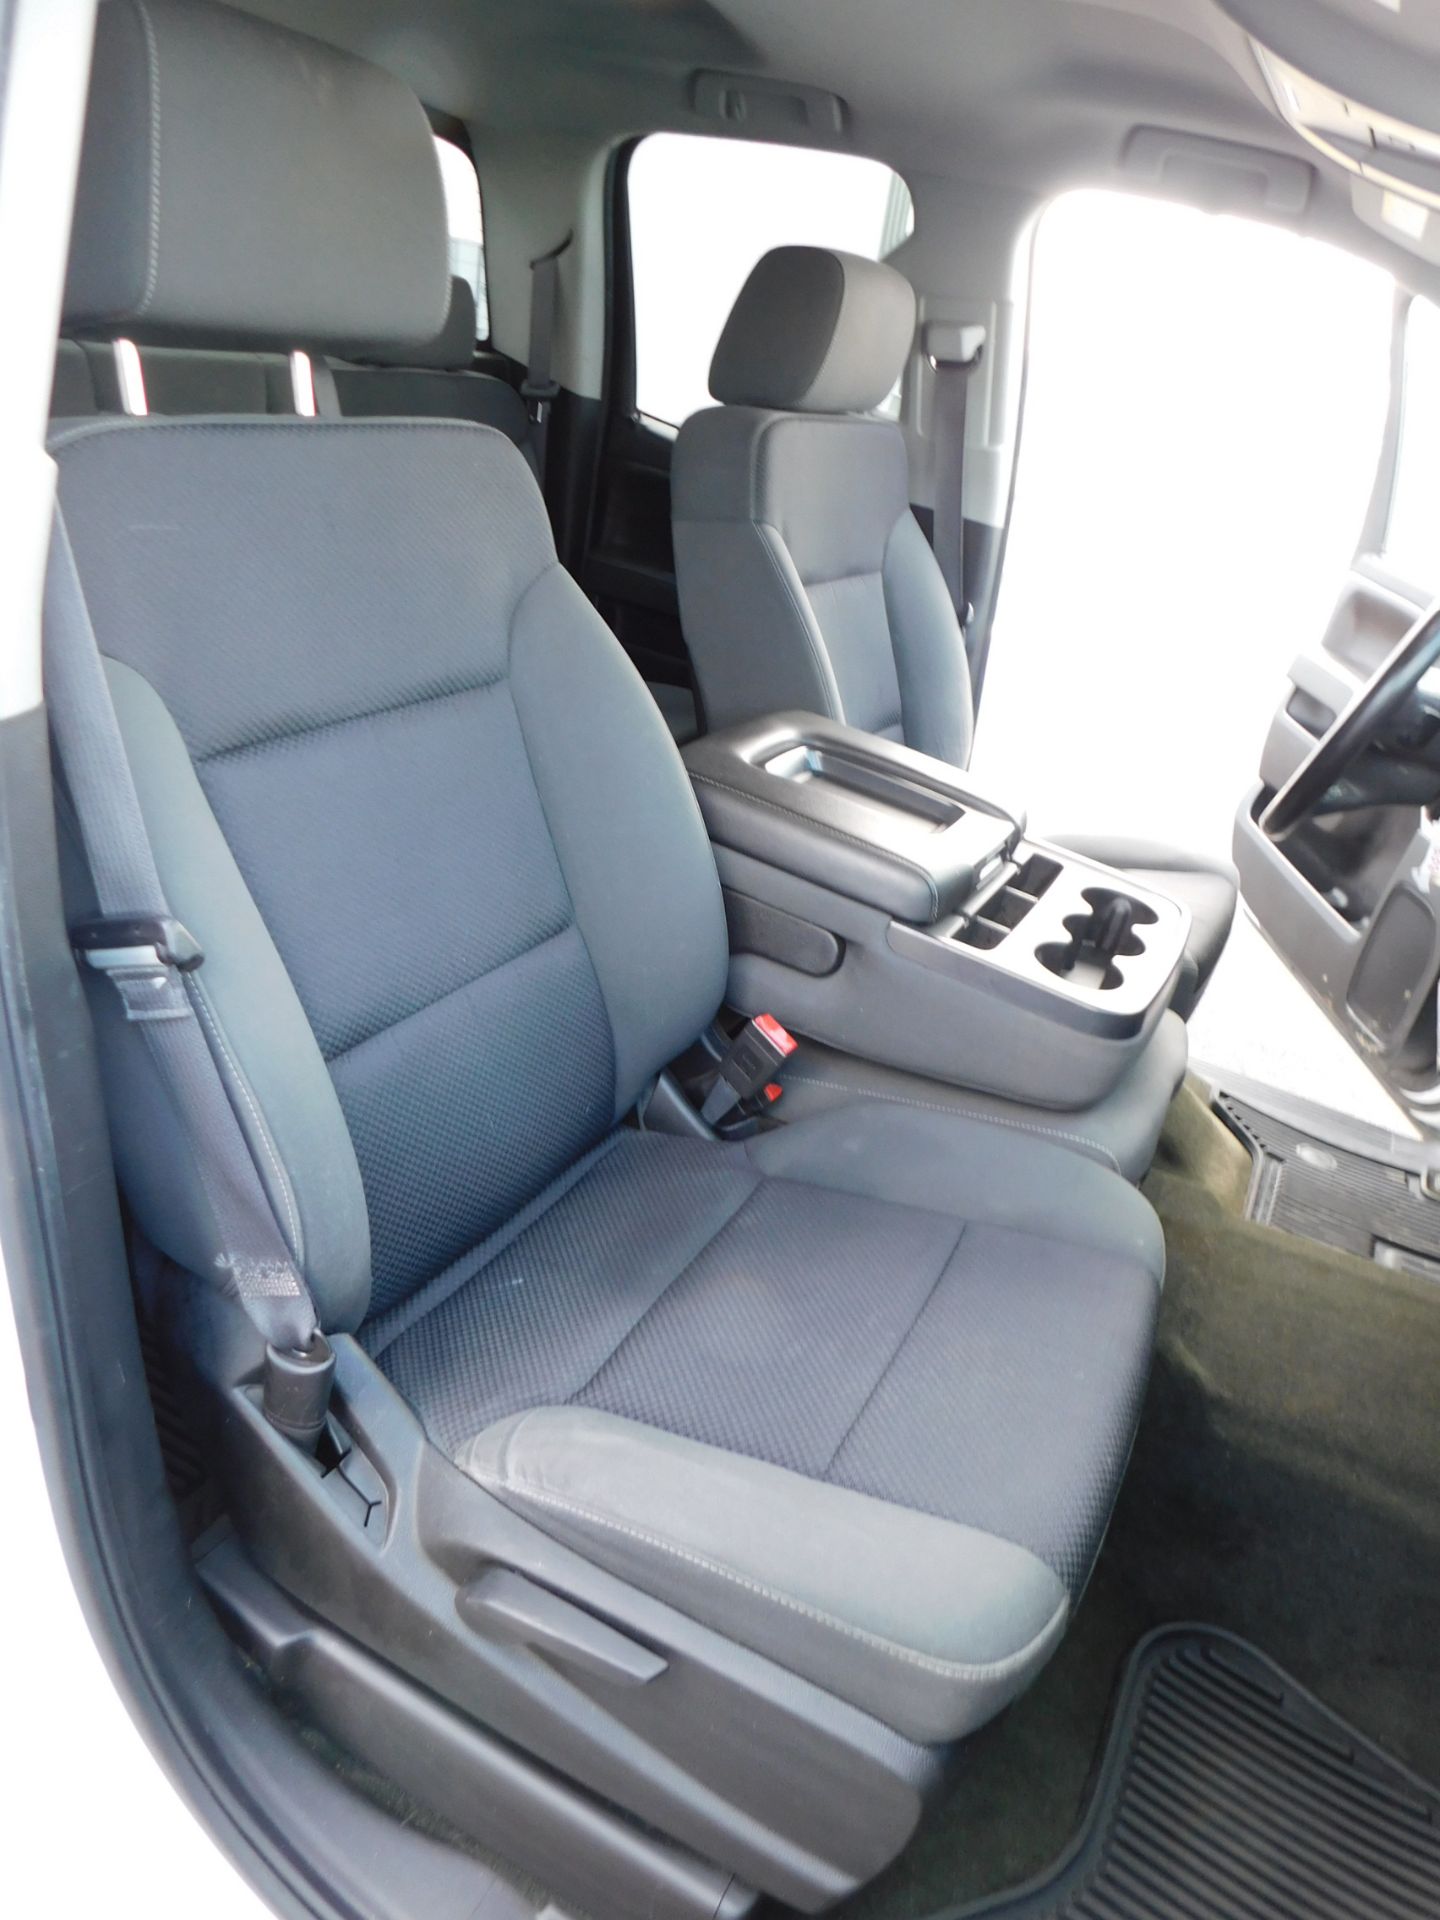 2014 Chevrolet Silverado LT Pickup, VIN 1GCVKREC3EZ139405, 4-Door 4 WD, Automatic, AM/FM, AC, Cruise - Image 42 of 51